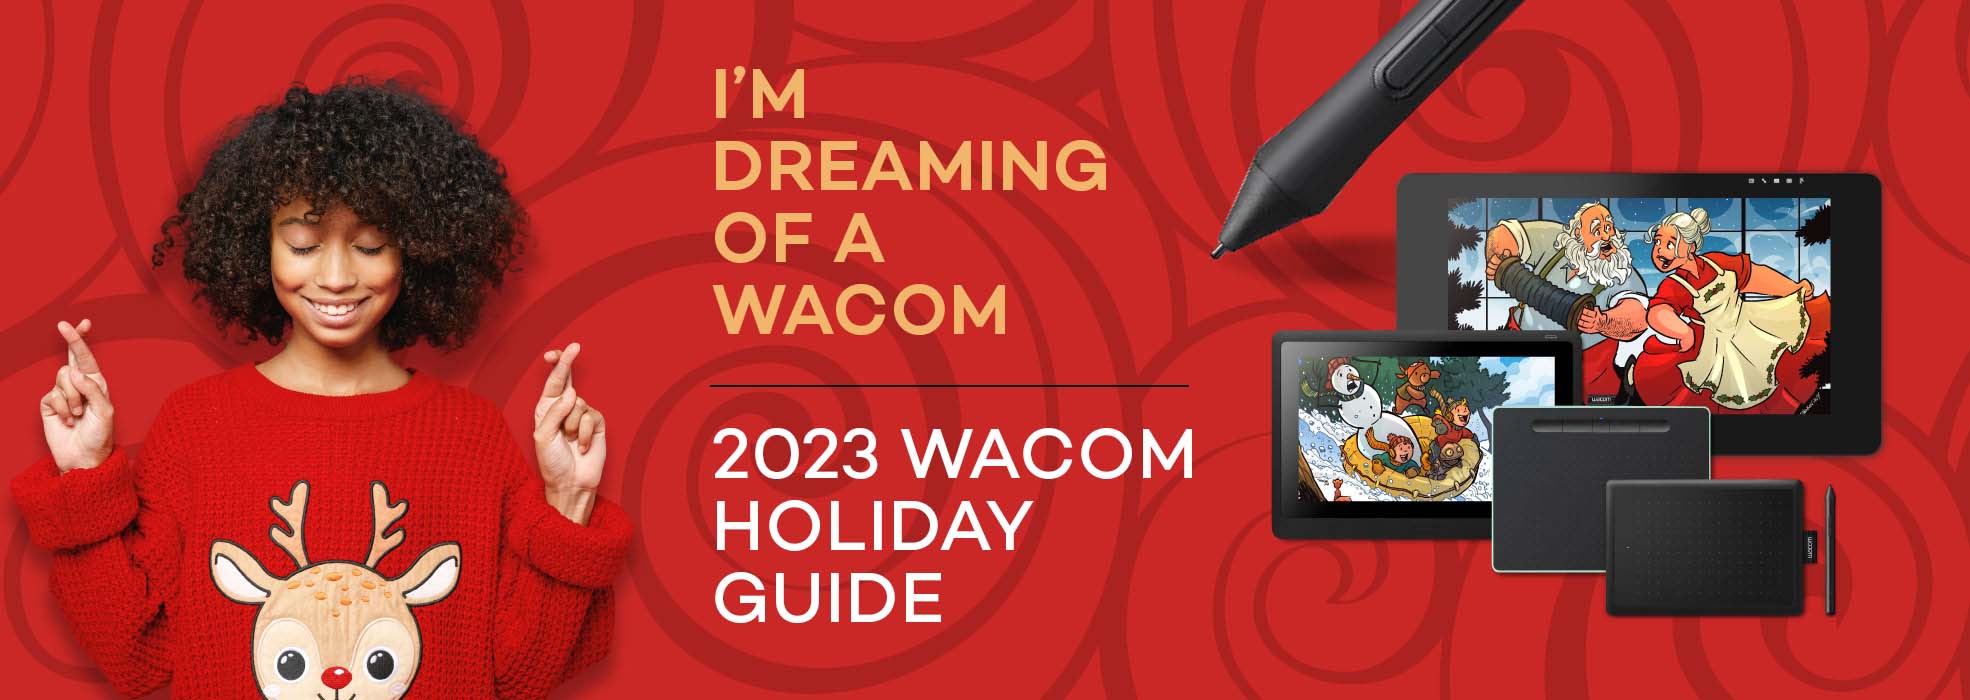 Wacom Gift Guide Blog Post Header